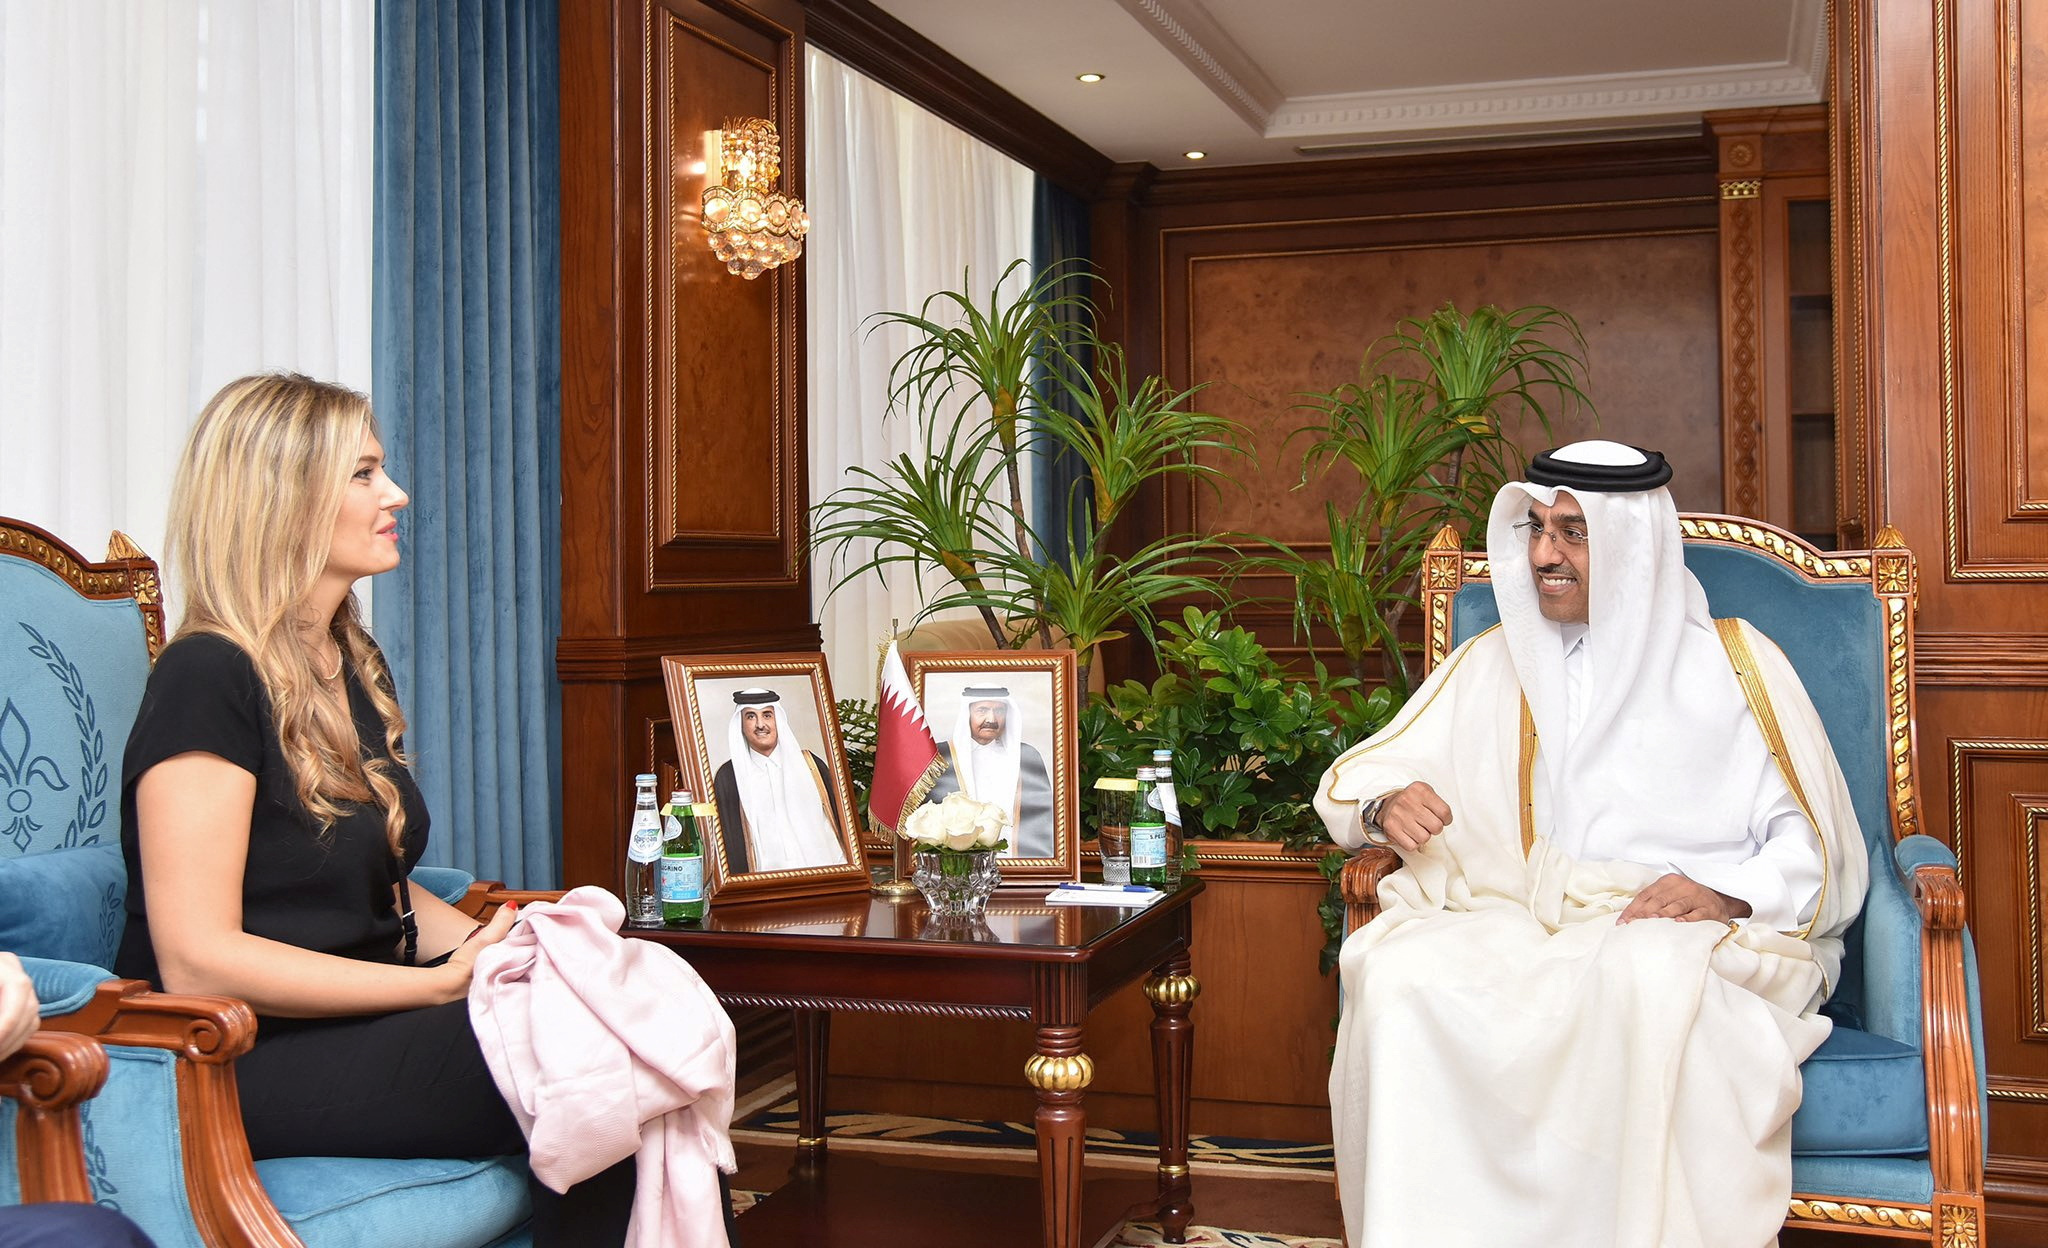 Qatari Labor Minister Al Marri meets with Kaili, Vice President of the European Parliament, during a meeting in Qatar